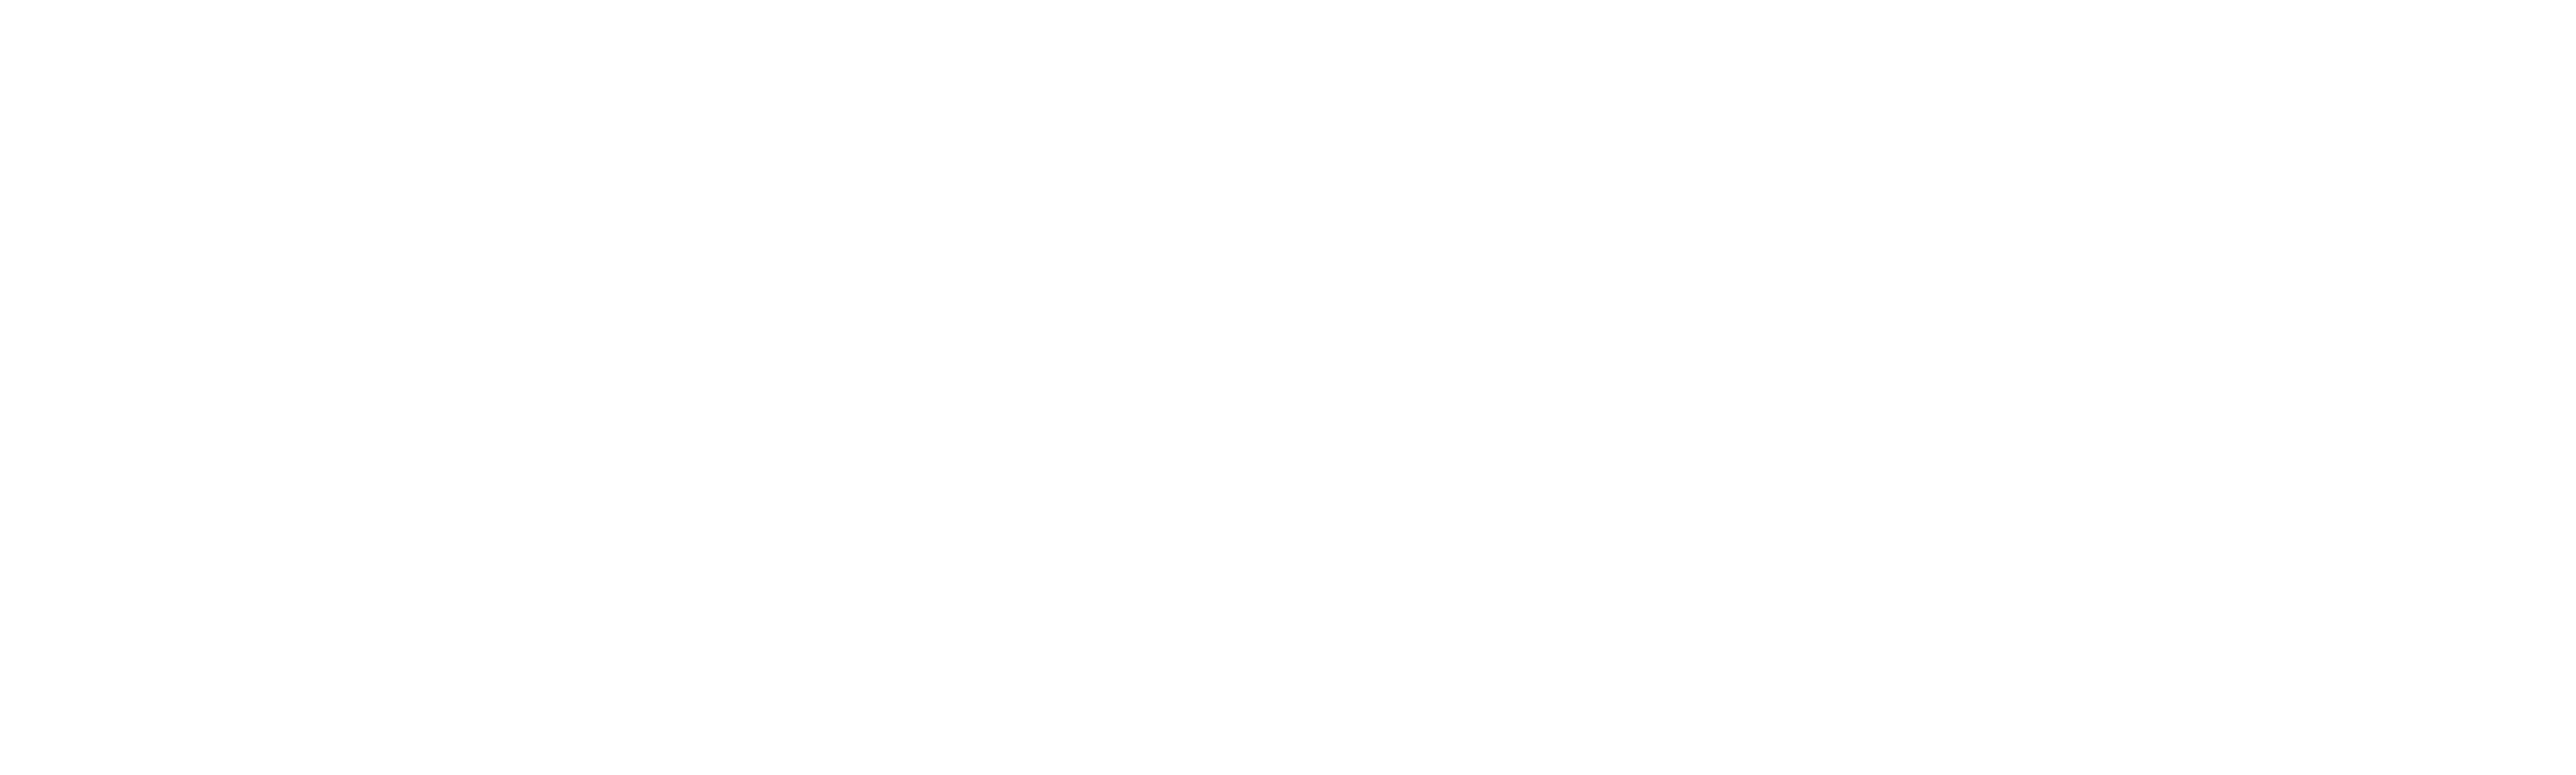 Star Trek II: The Wrath of Khan (HBO)